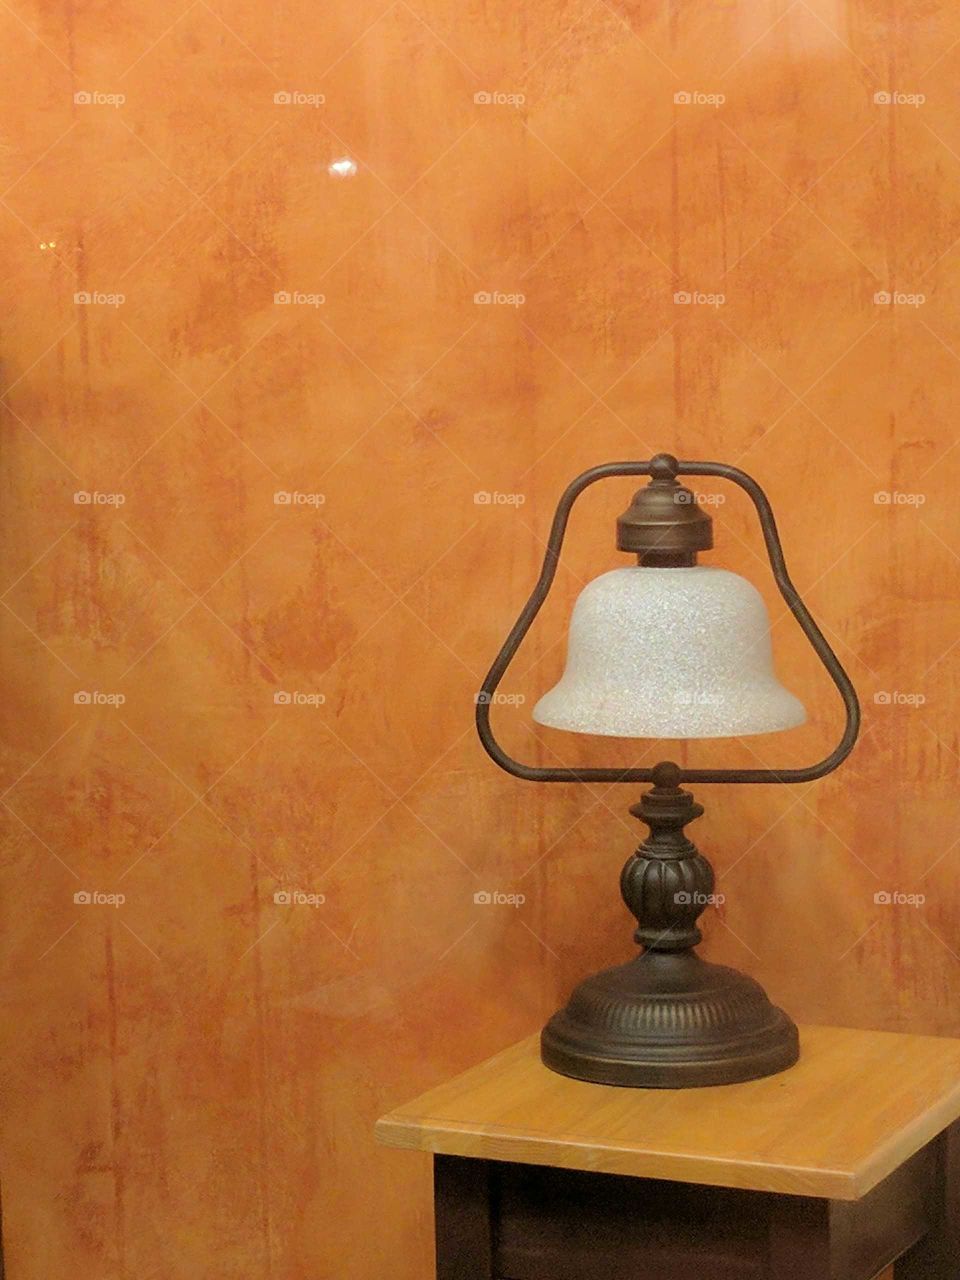 Retro style lamp